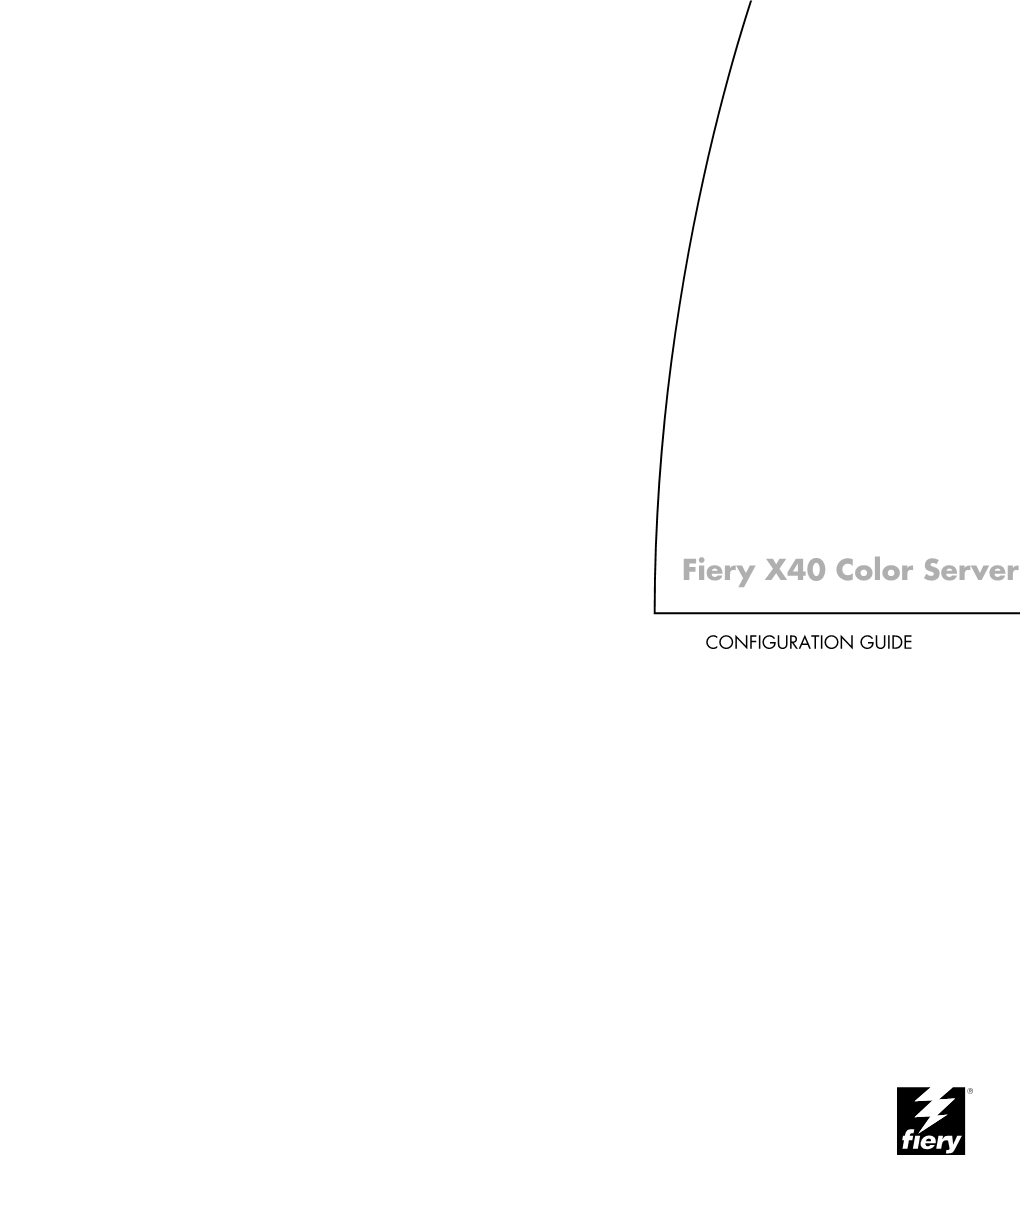 Fiery X40 Color Server